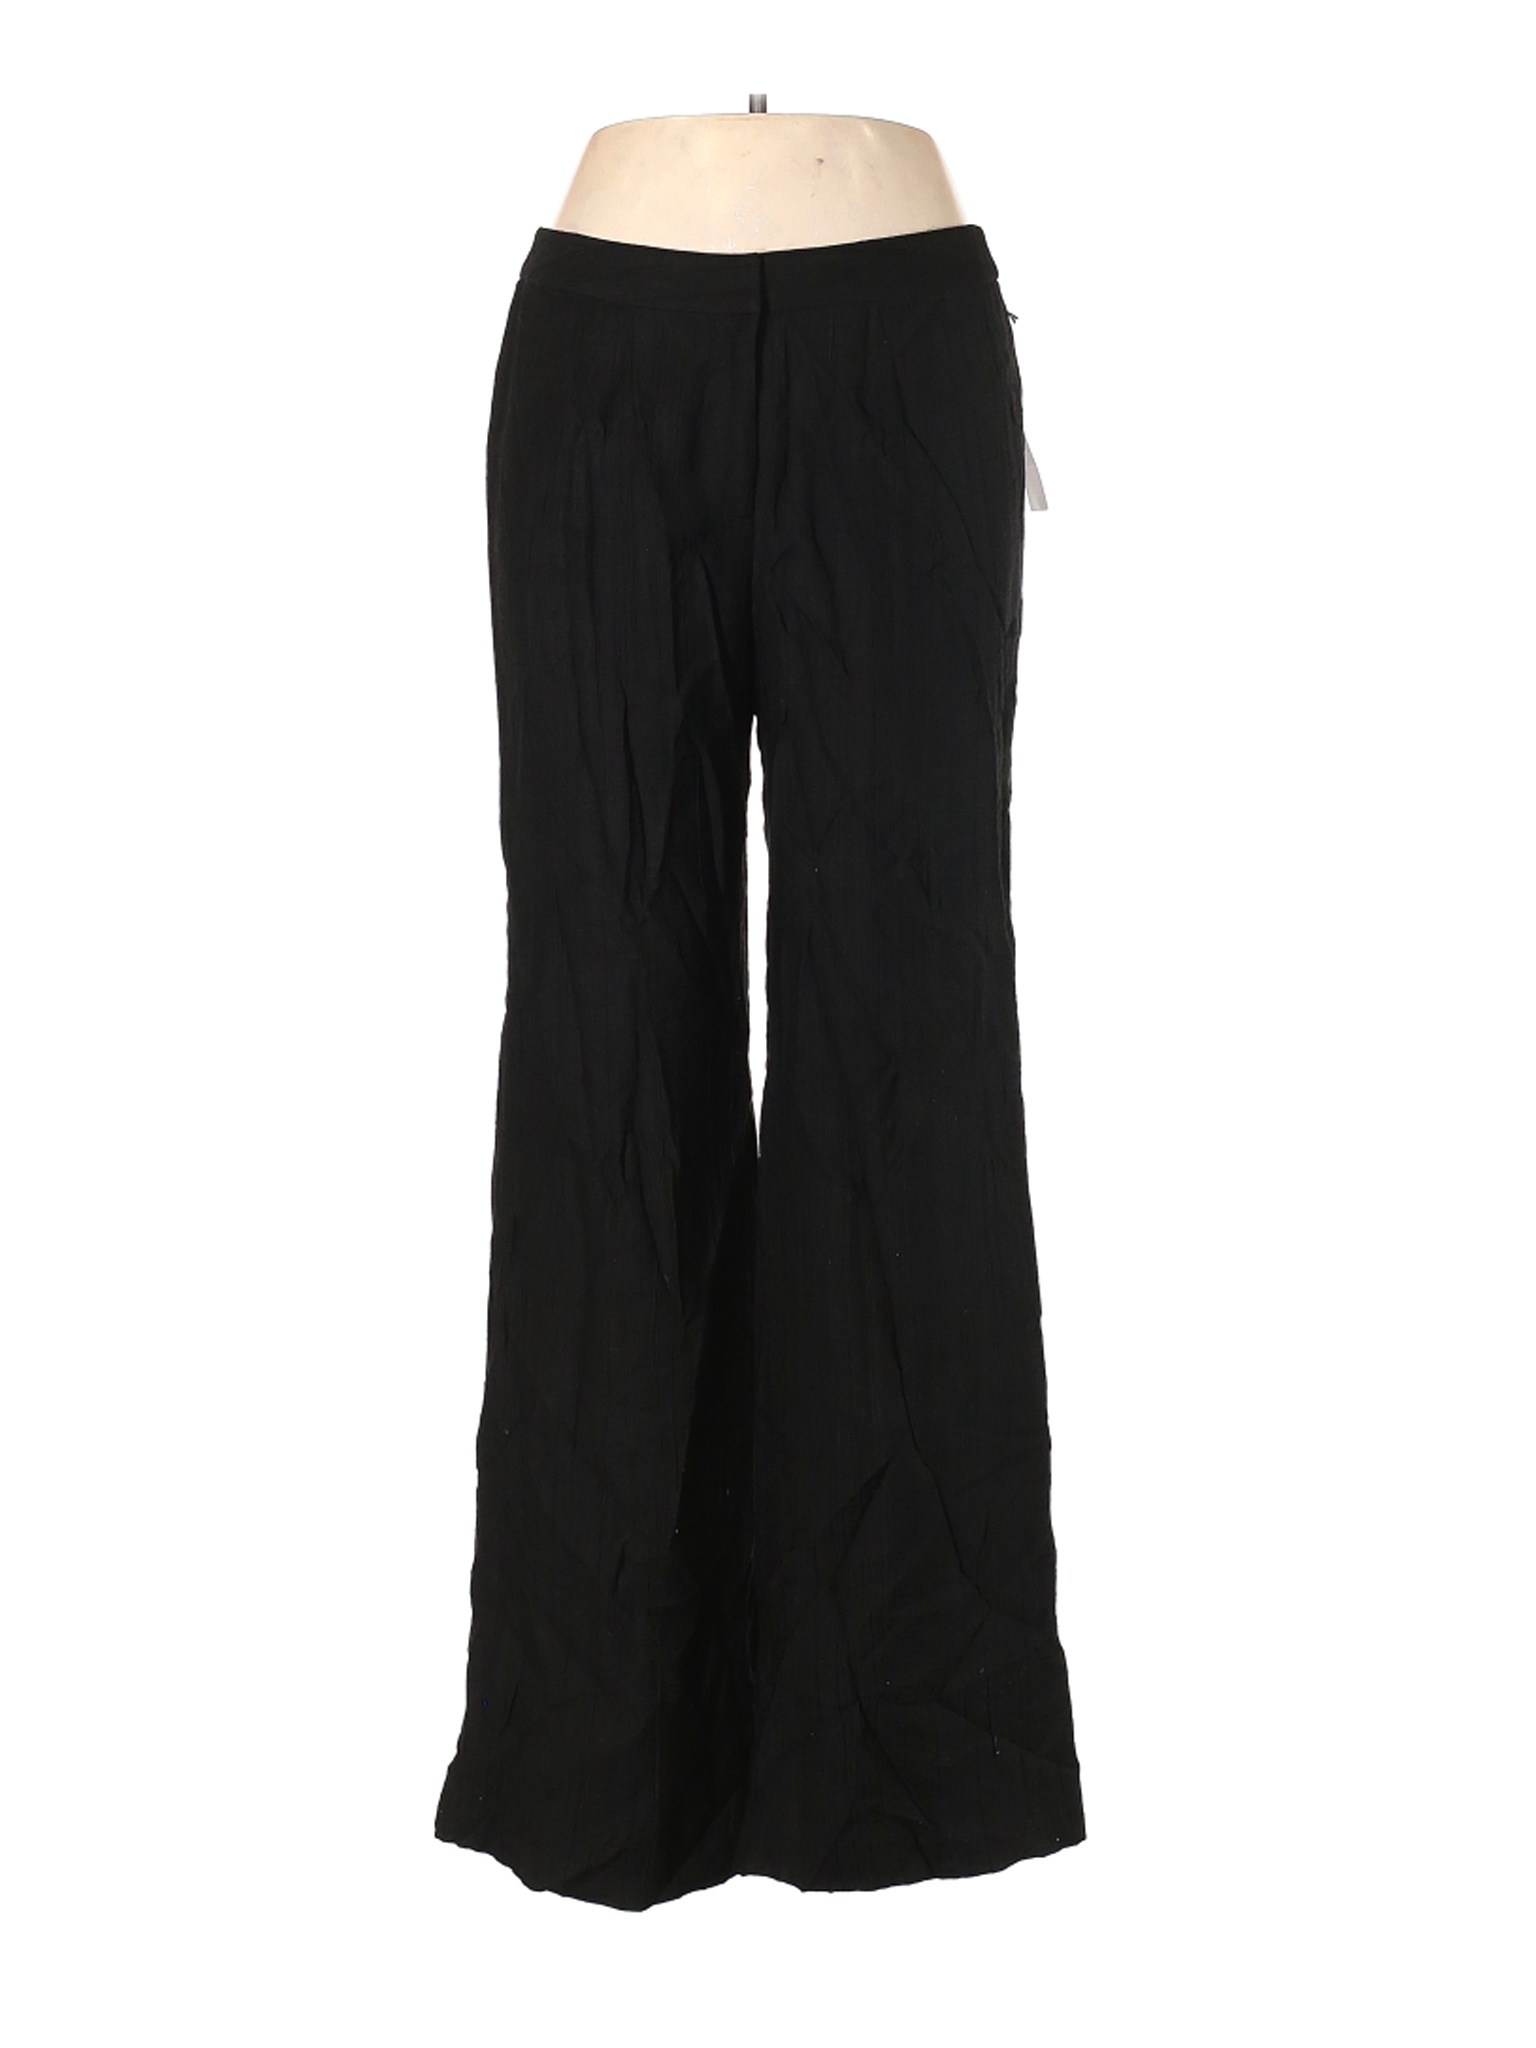 NWT Simon Chang Women Black Casual Pants 10 | eBay